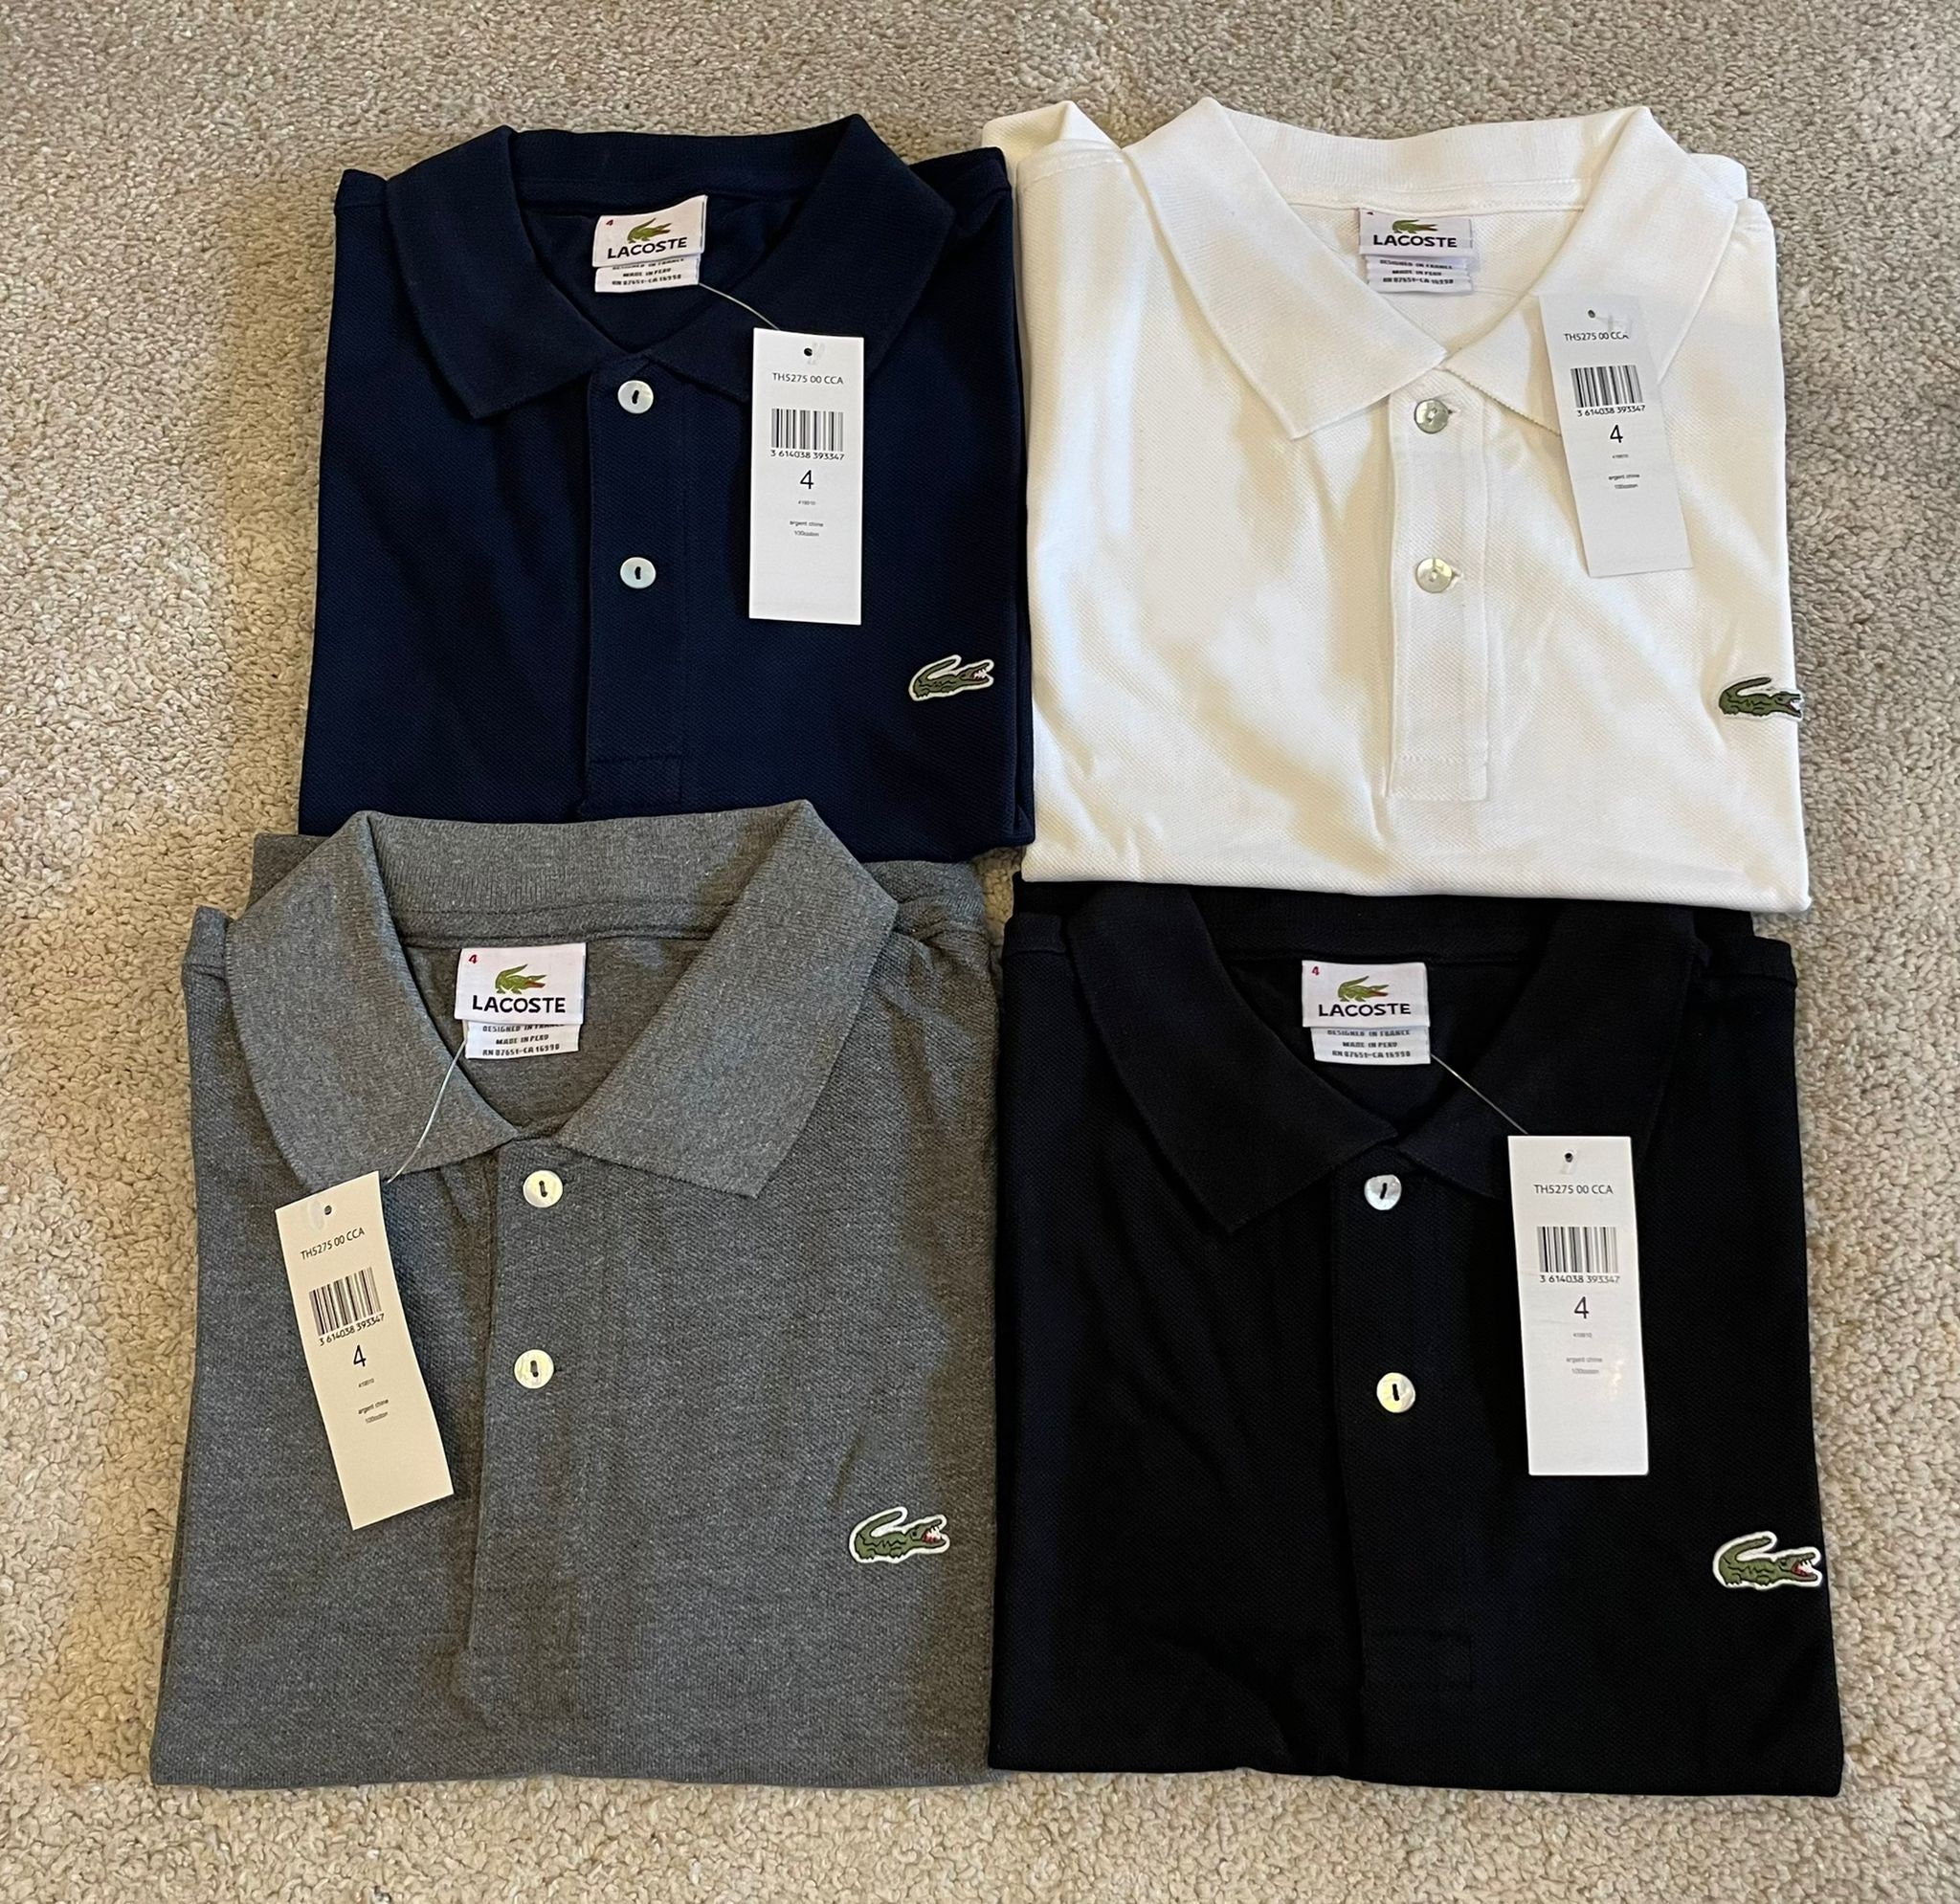 malt ugunstige ophavsret Lacoste Short Sleeve Polo Shirt With Tags Black White Grey - Etsy